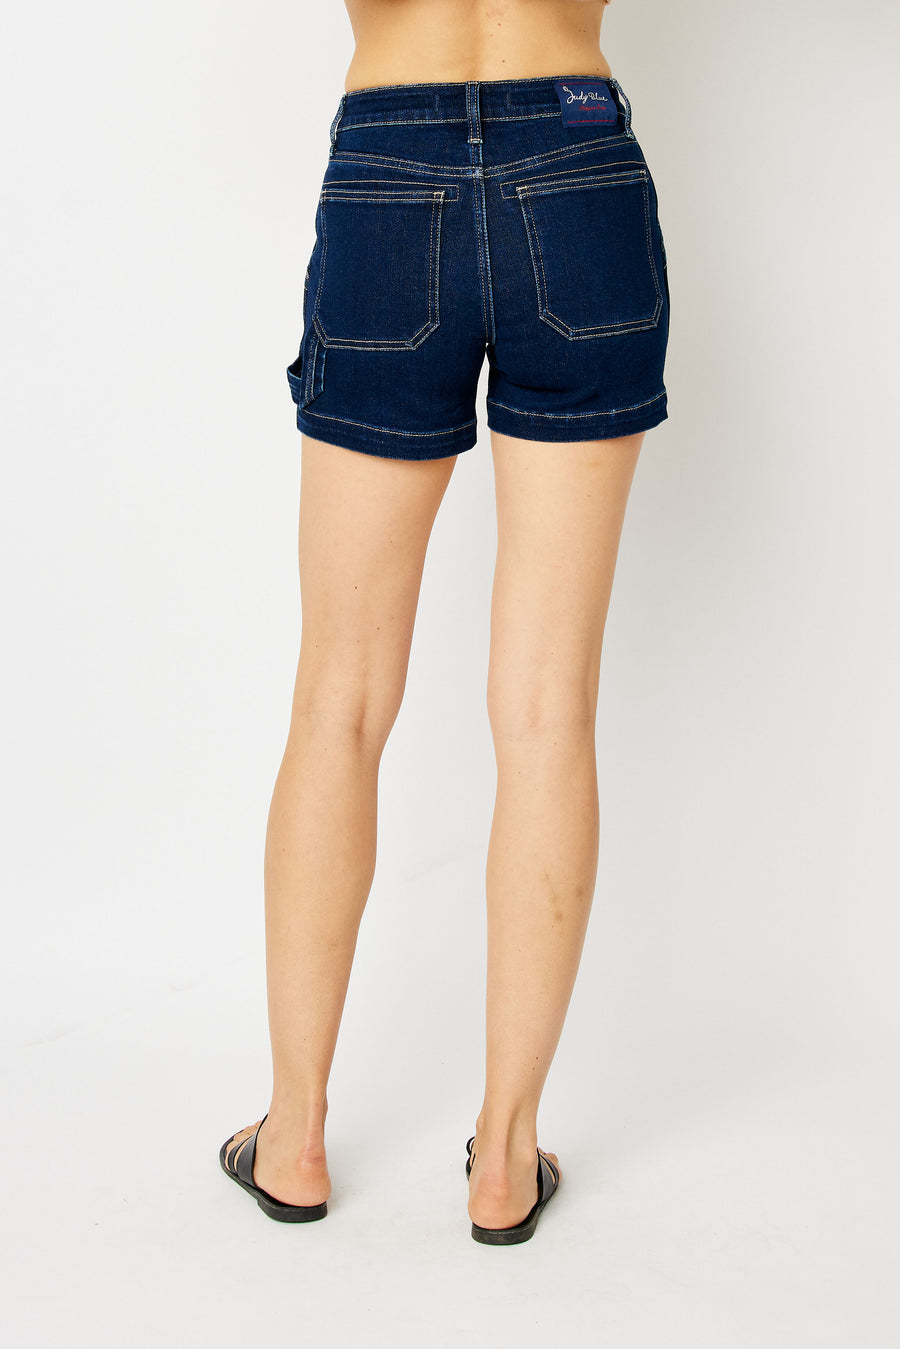 Sabrina | Midrise Classic Carpenter Shorts (Judy Blue Style 150243)